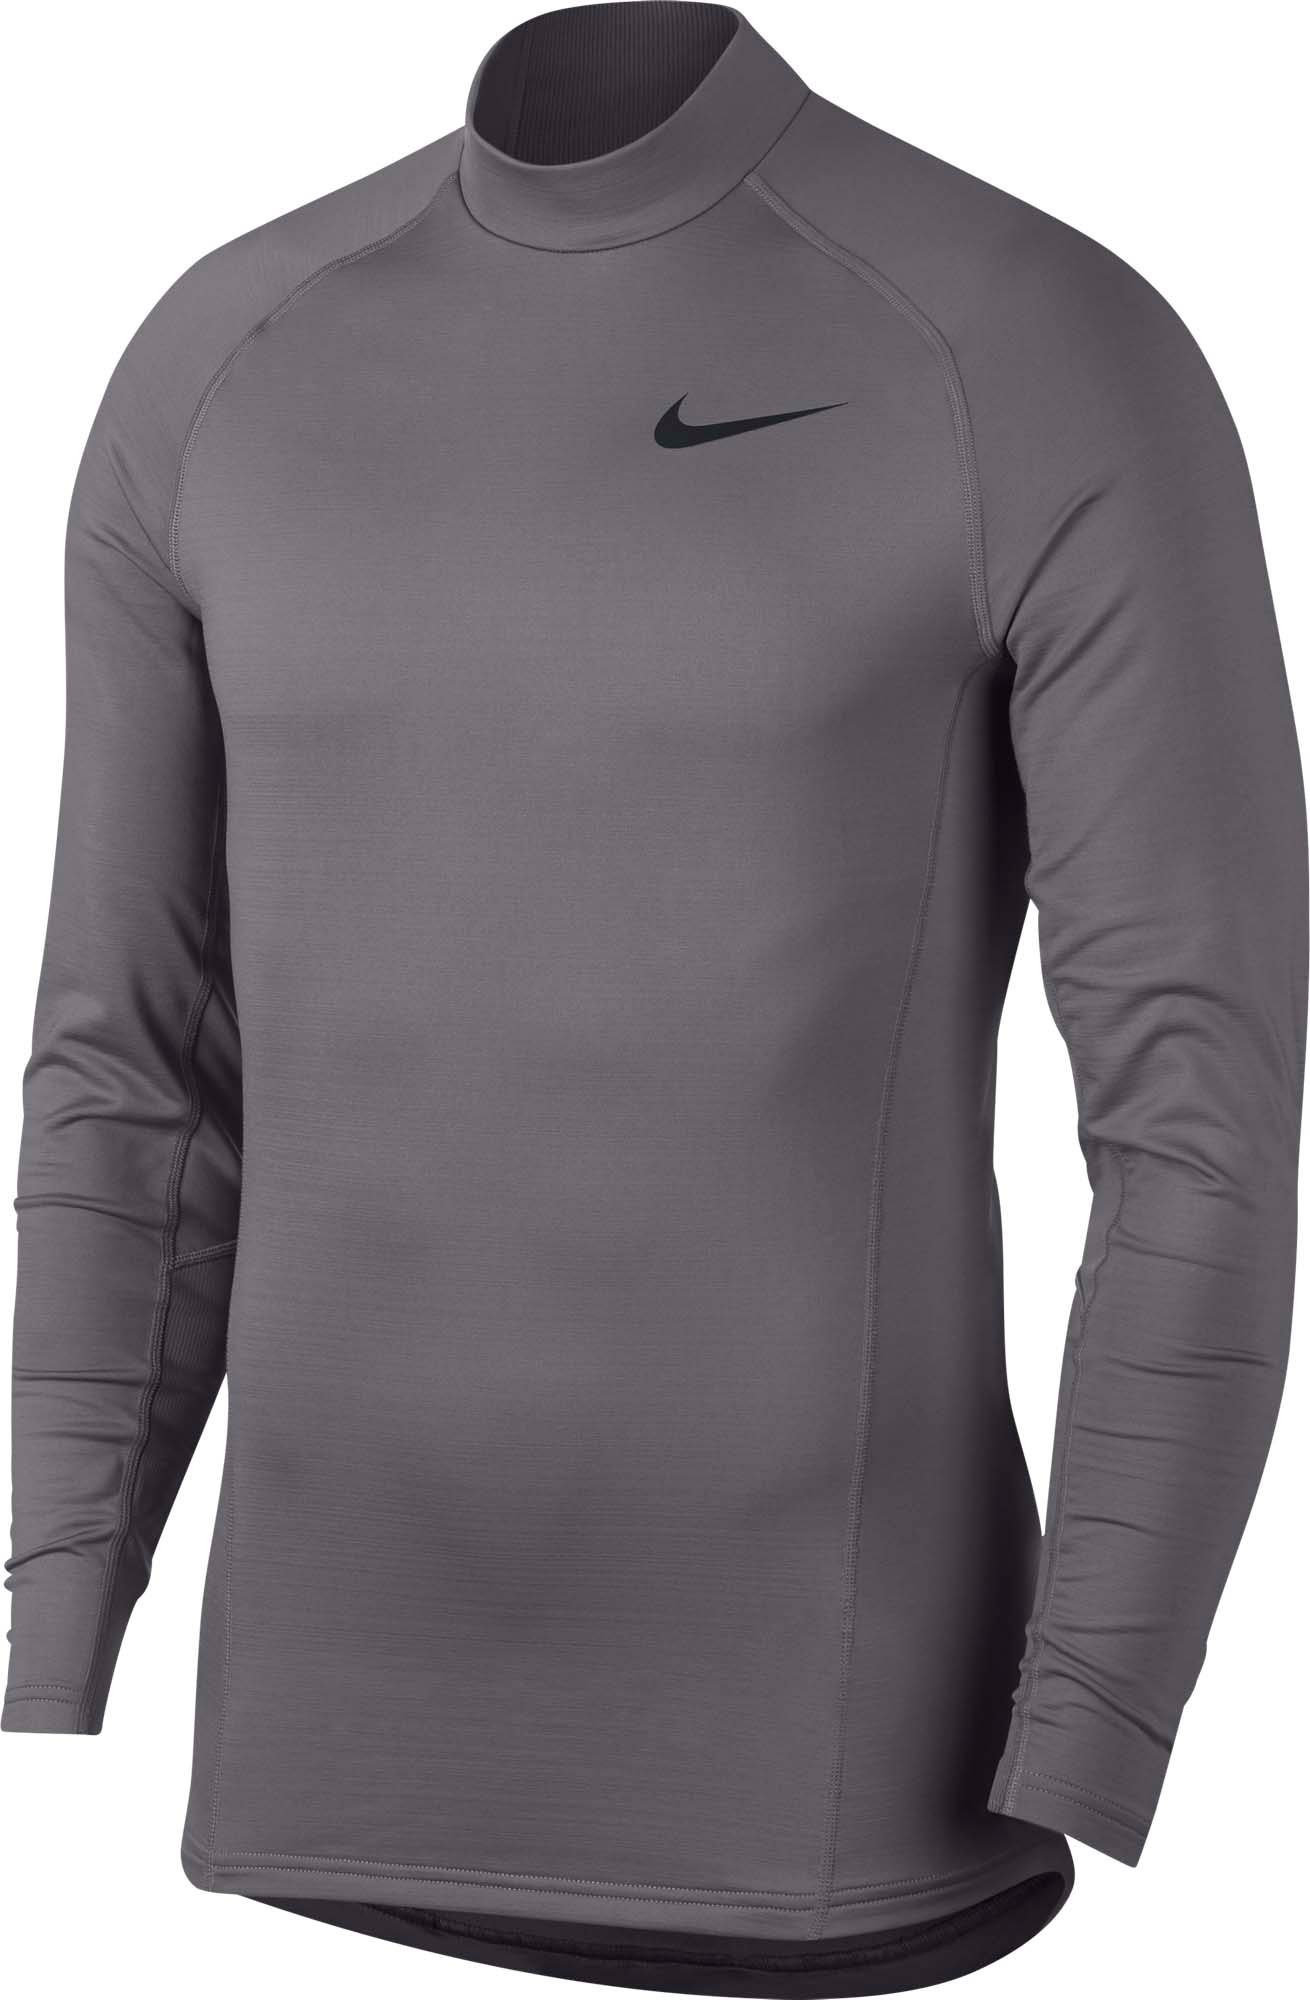 Nike Men's Therma Long Sleeve Shirt (Regular and Big & Tall) - .97 - .97